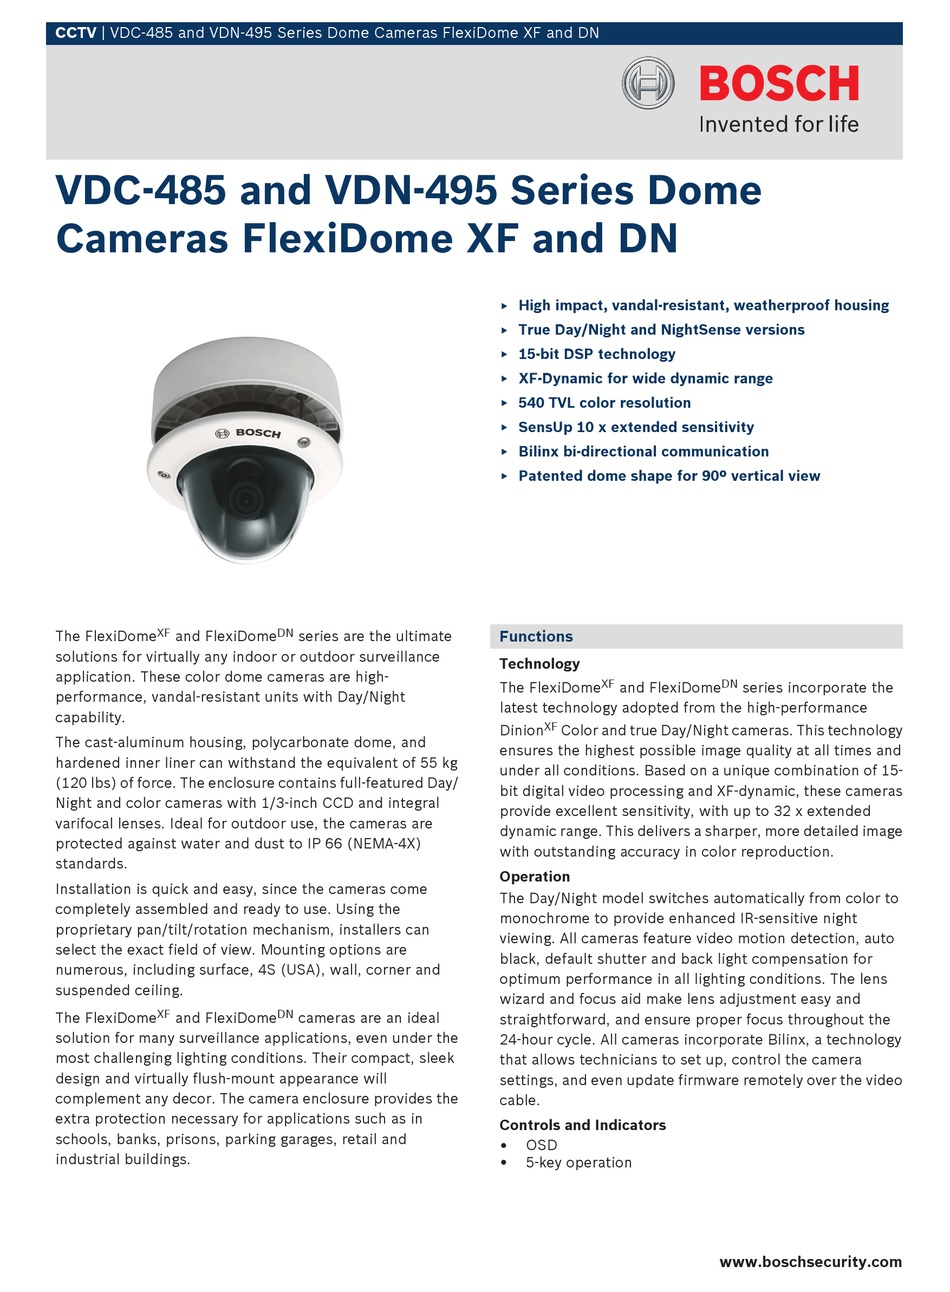 Bosch VDC-455V04-20 Security Survelliance Camera Cam Dome 3.7-12 1/3 NTSC 